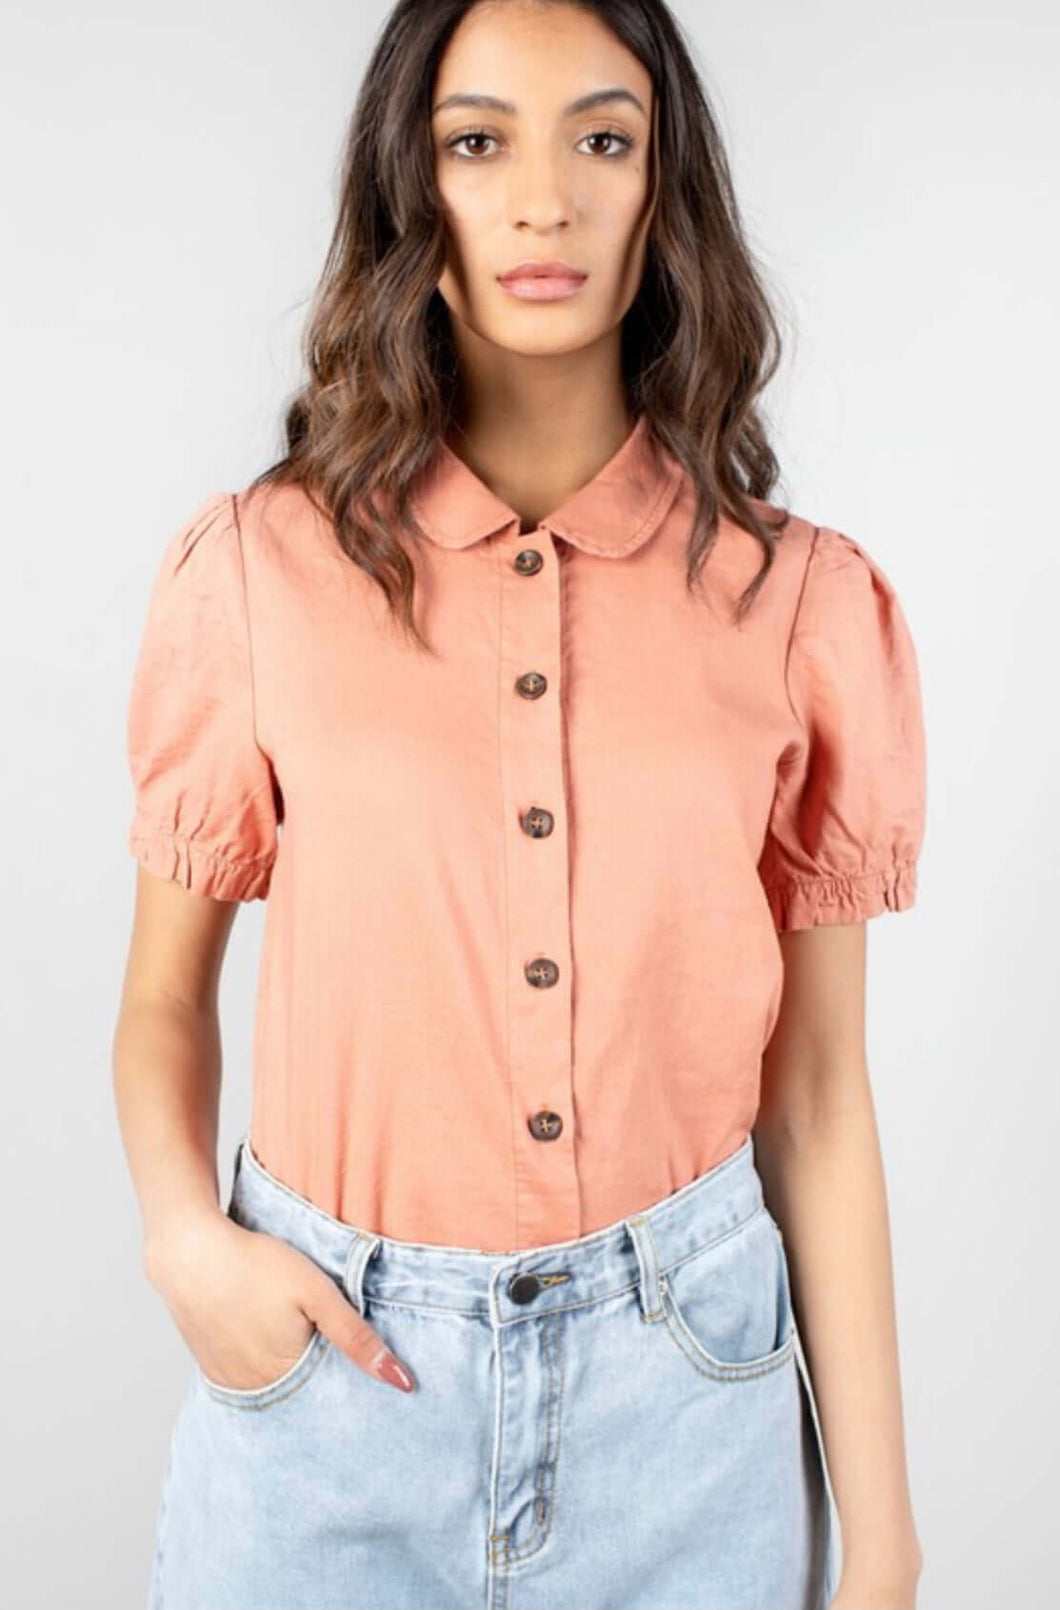 Mod Ref dusty pink collard button front short sleeve shirt front.  